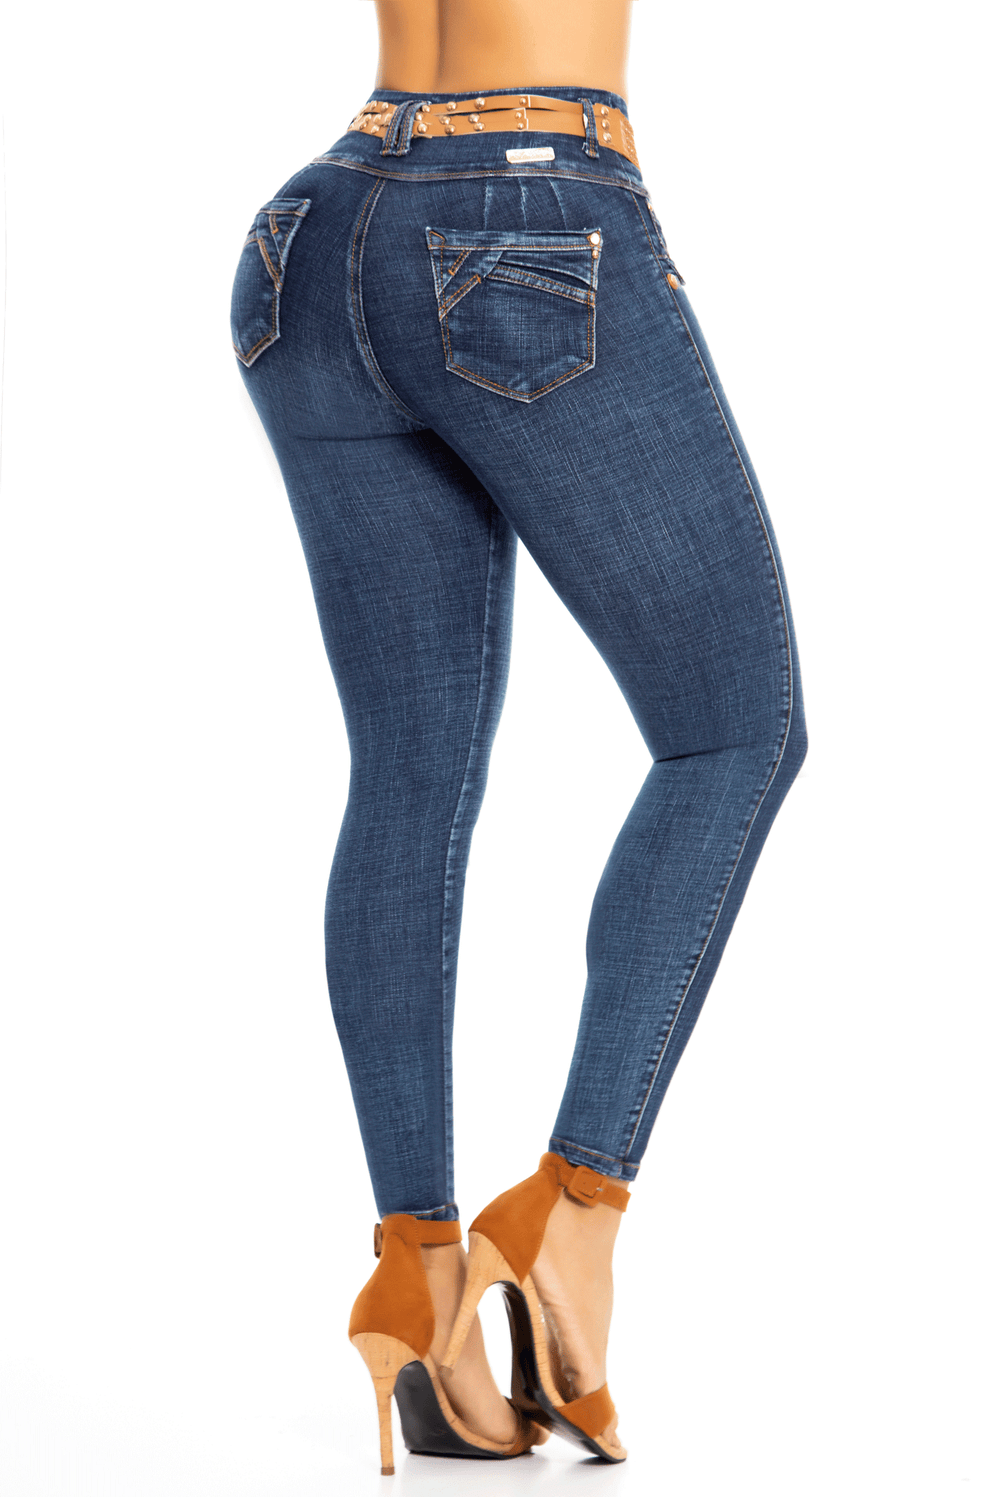 Pantalones Jean para dama levantacola, C.I. NEW FACE LTDA